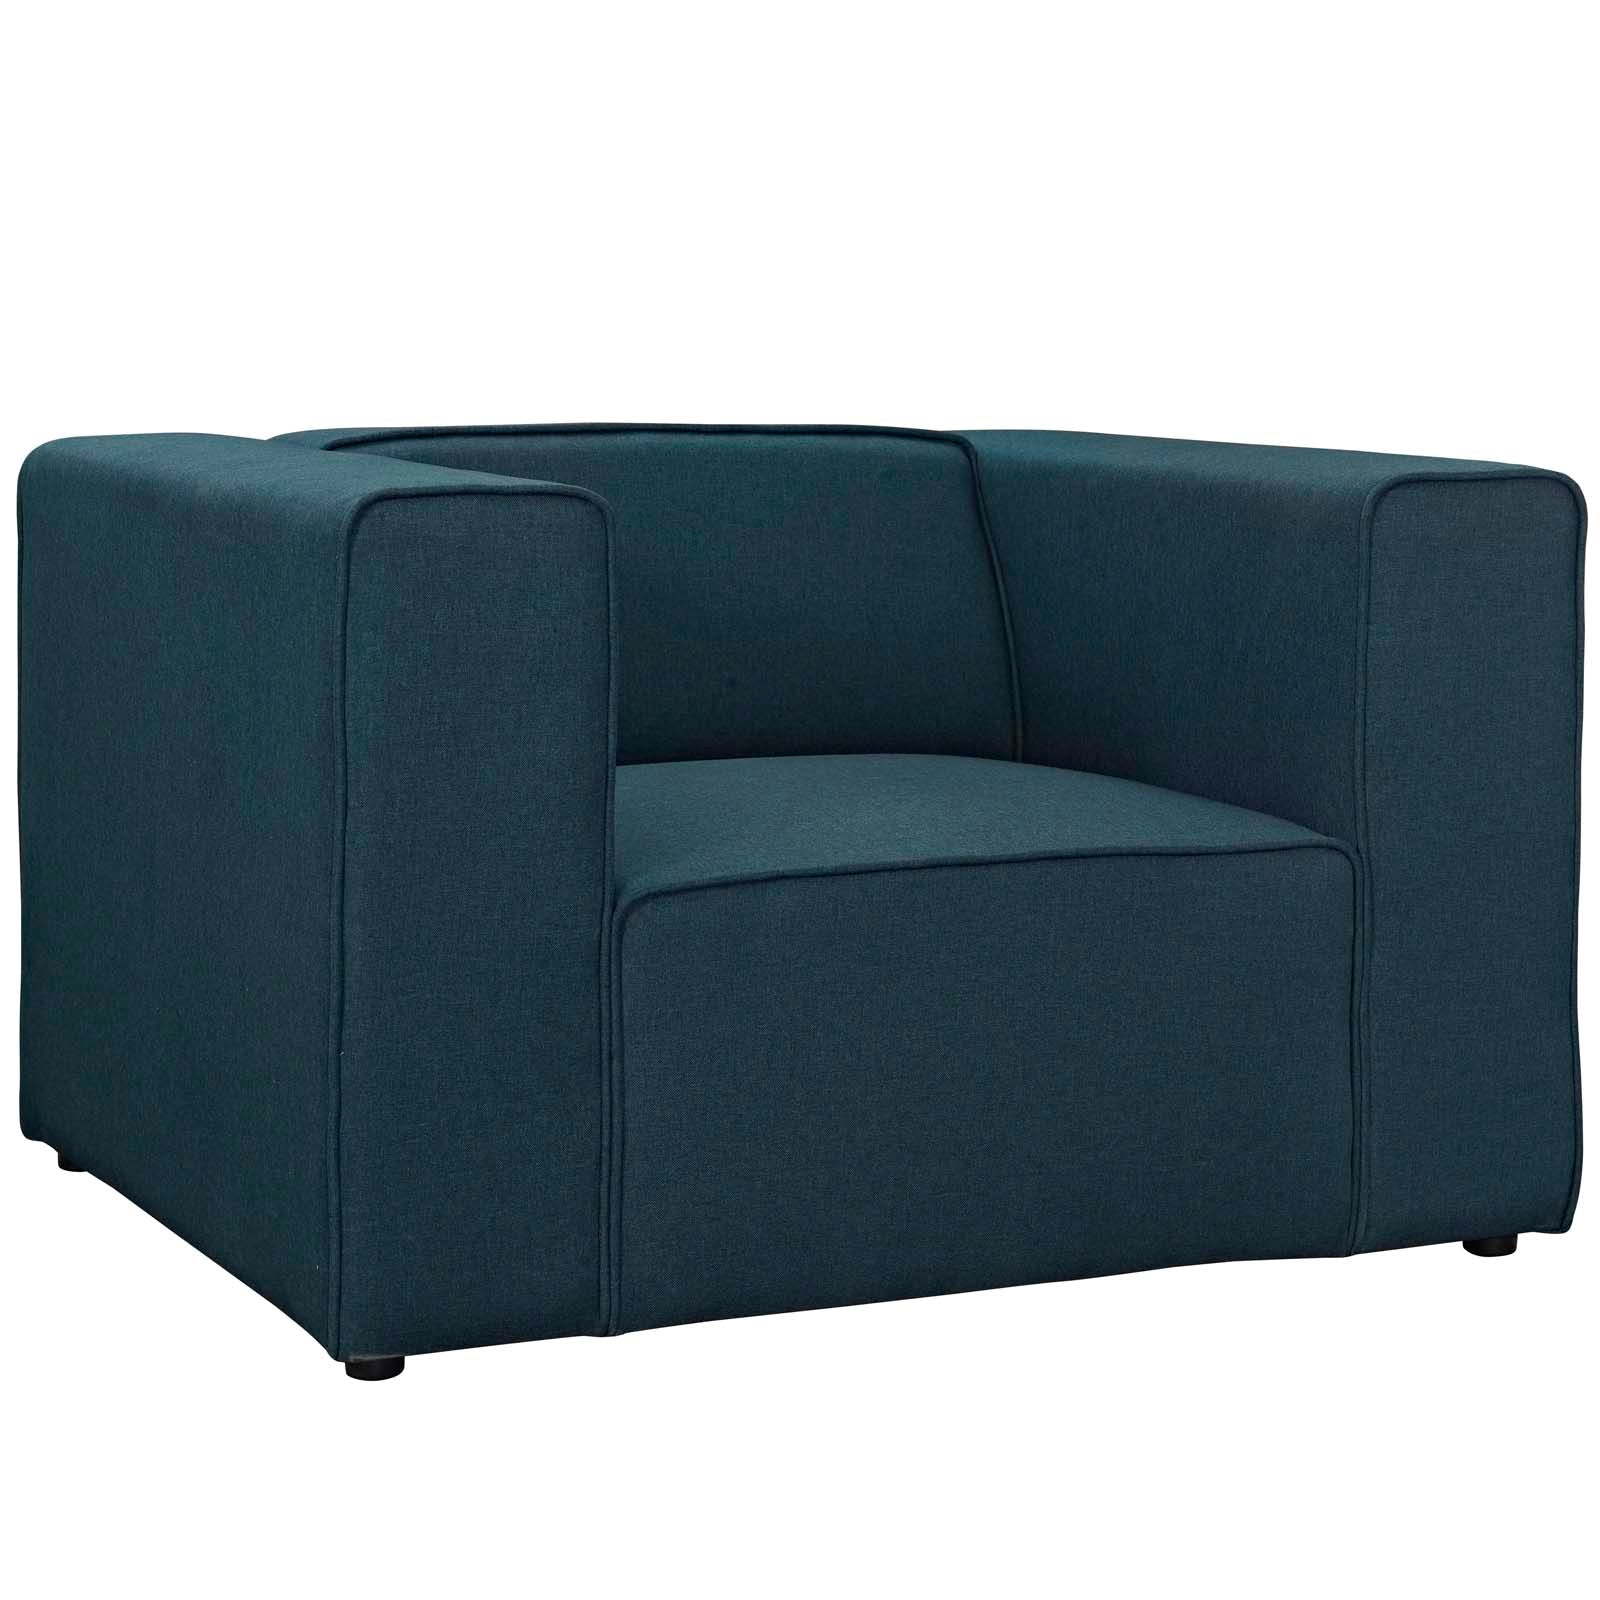 Modern Comfy Mingle Upholstered Fabric Armchair - Luxurious Plush Foam Cushioning Armrest Chair